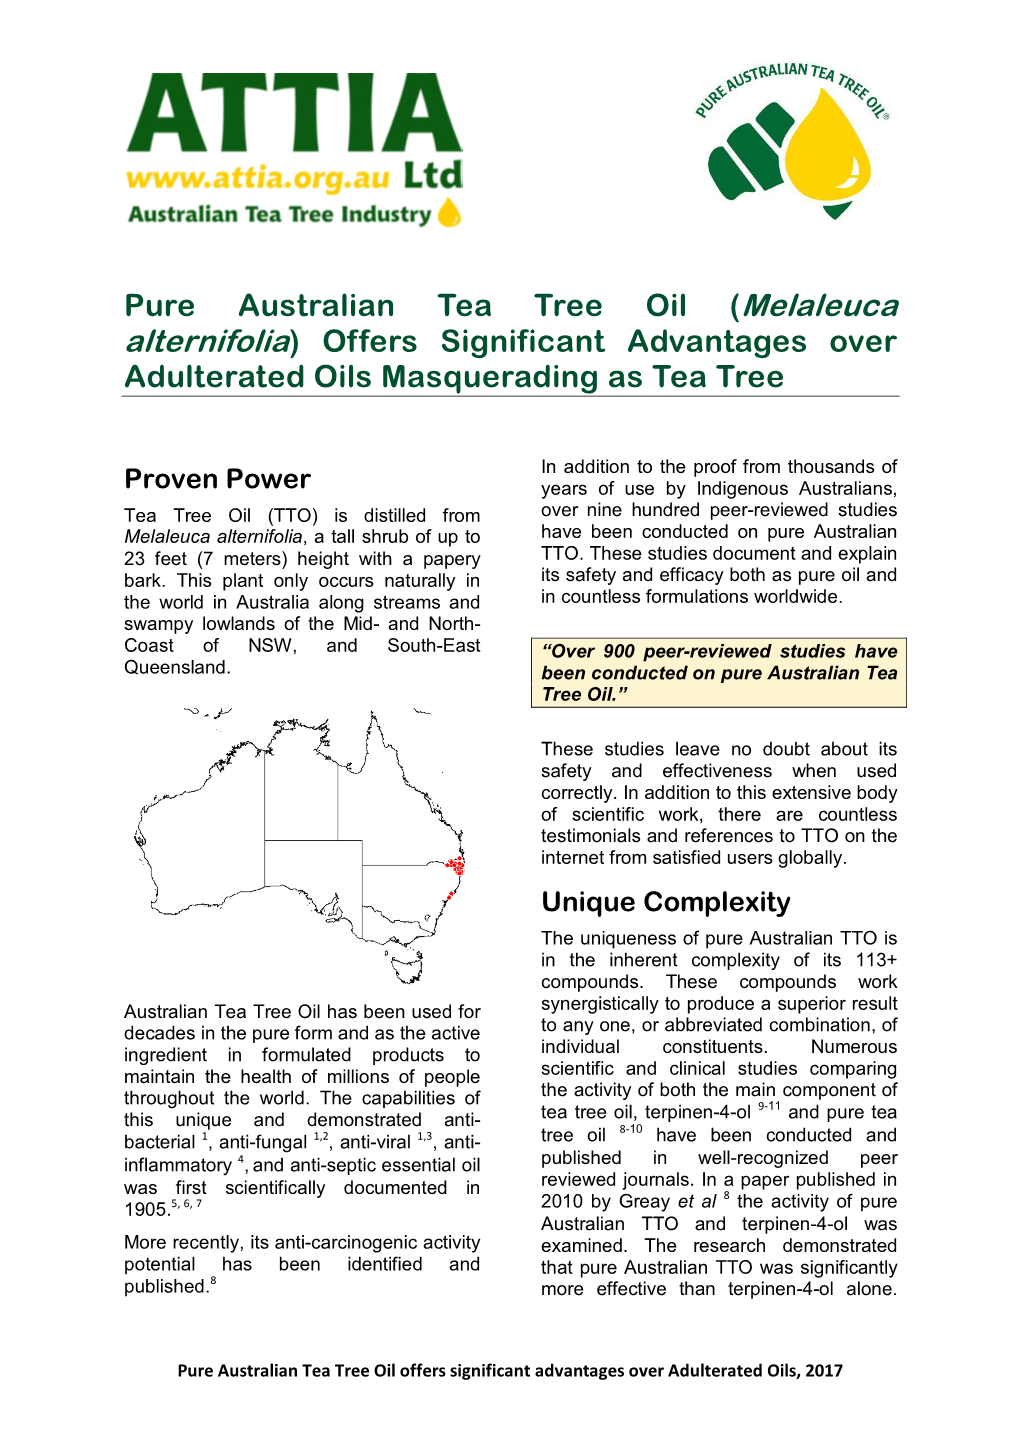 Melaleuca Alternifolia) Offers Significant Advantages Over Adulterated Oils Masquerading As Tea Tree